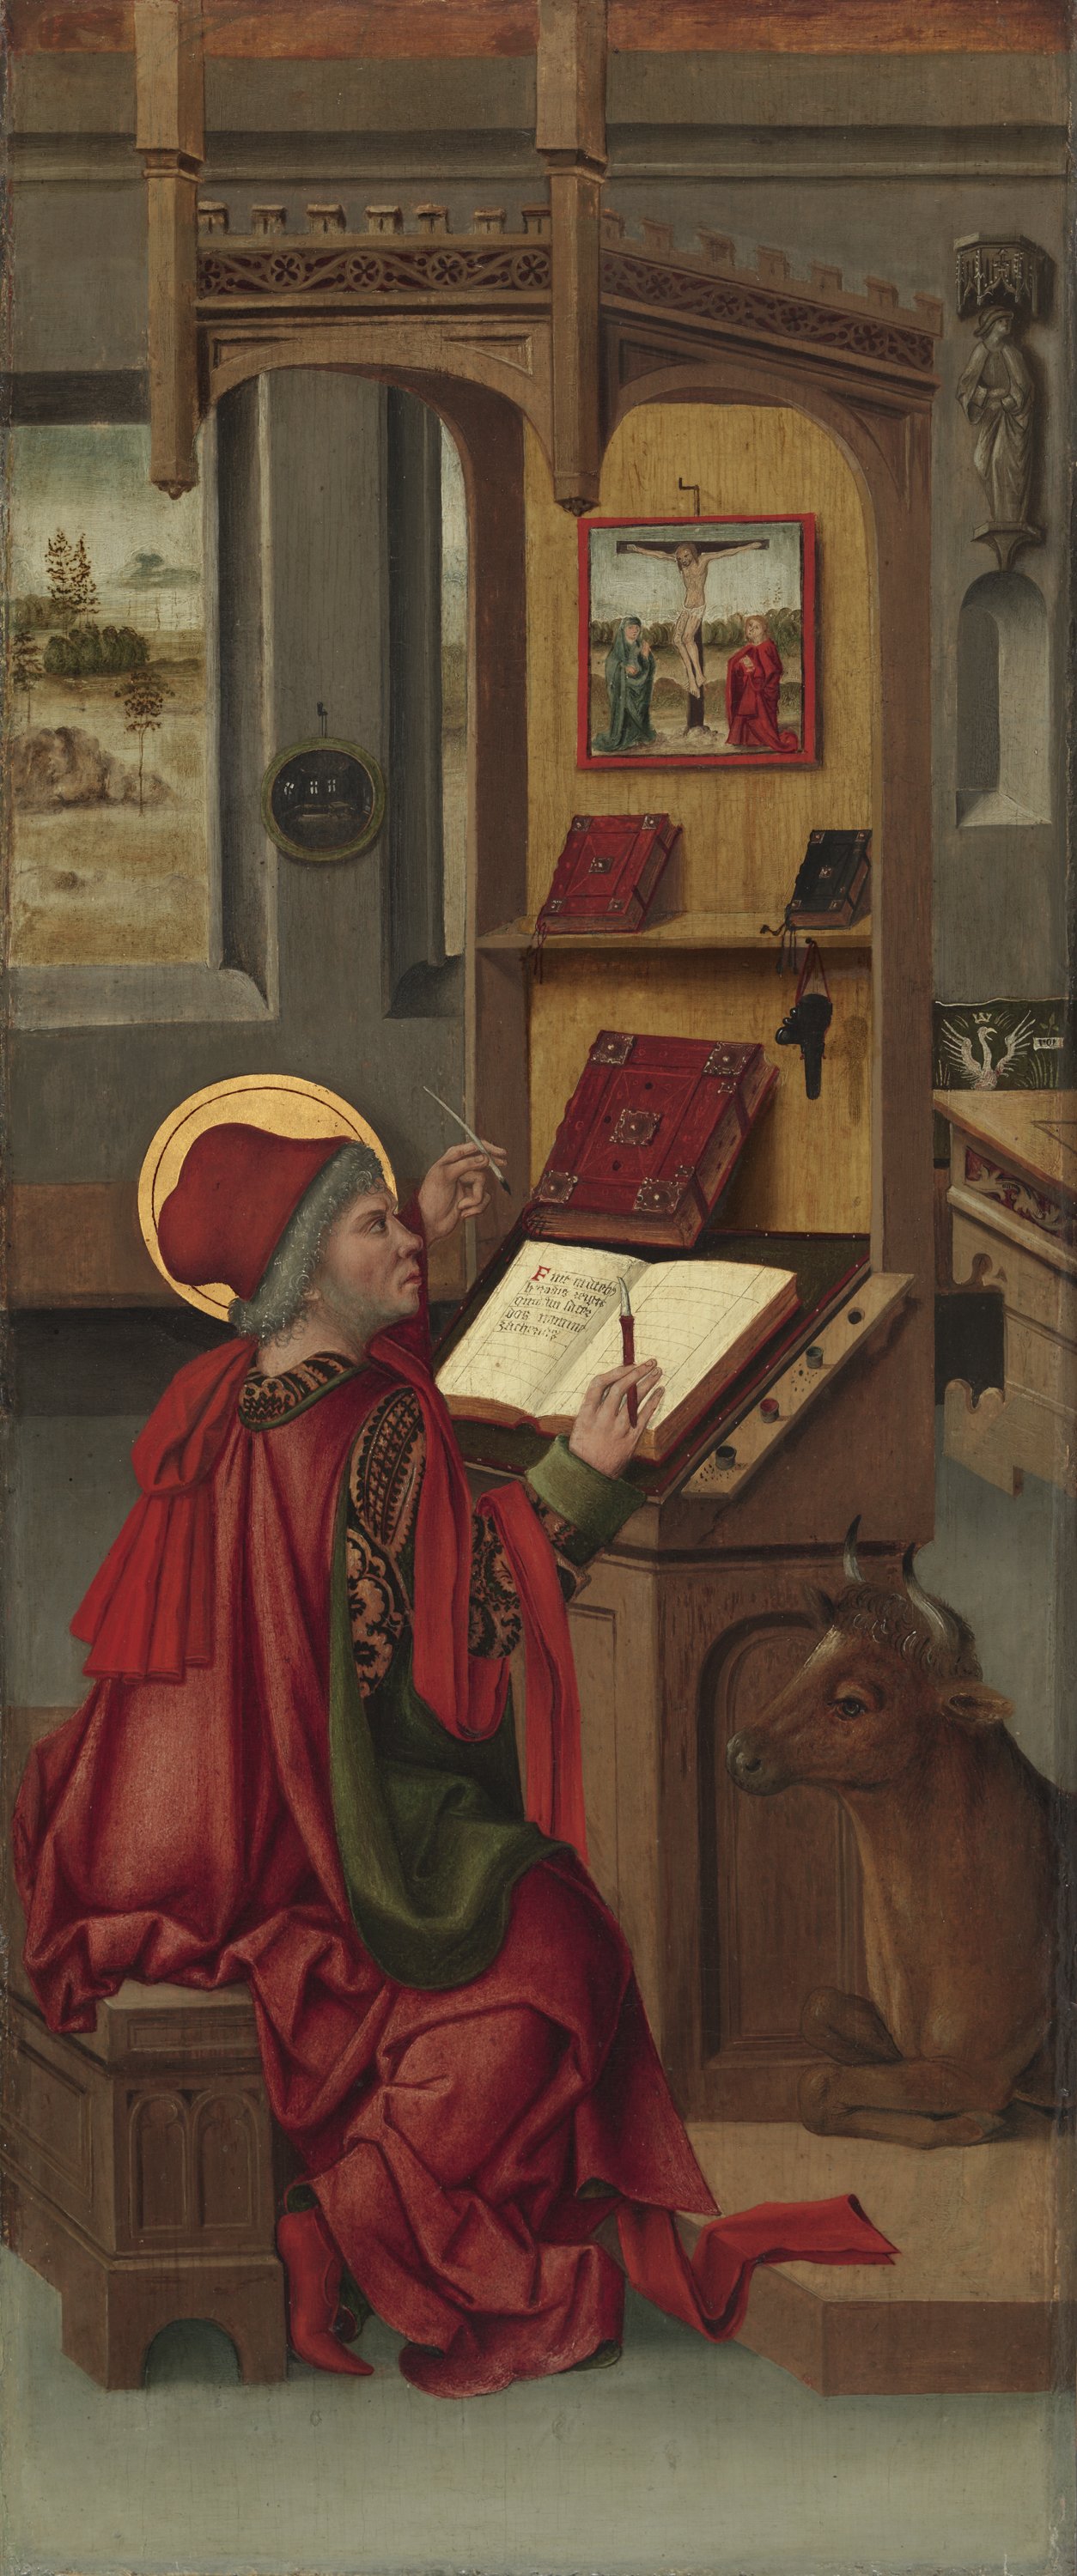 Saint Luke the Evangelist. El evangelista san Lucas, 1478